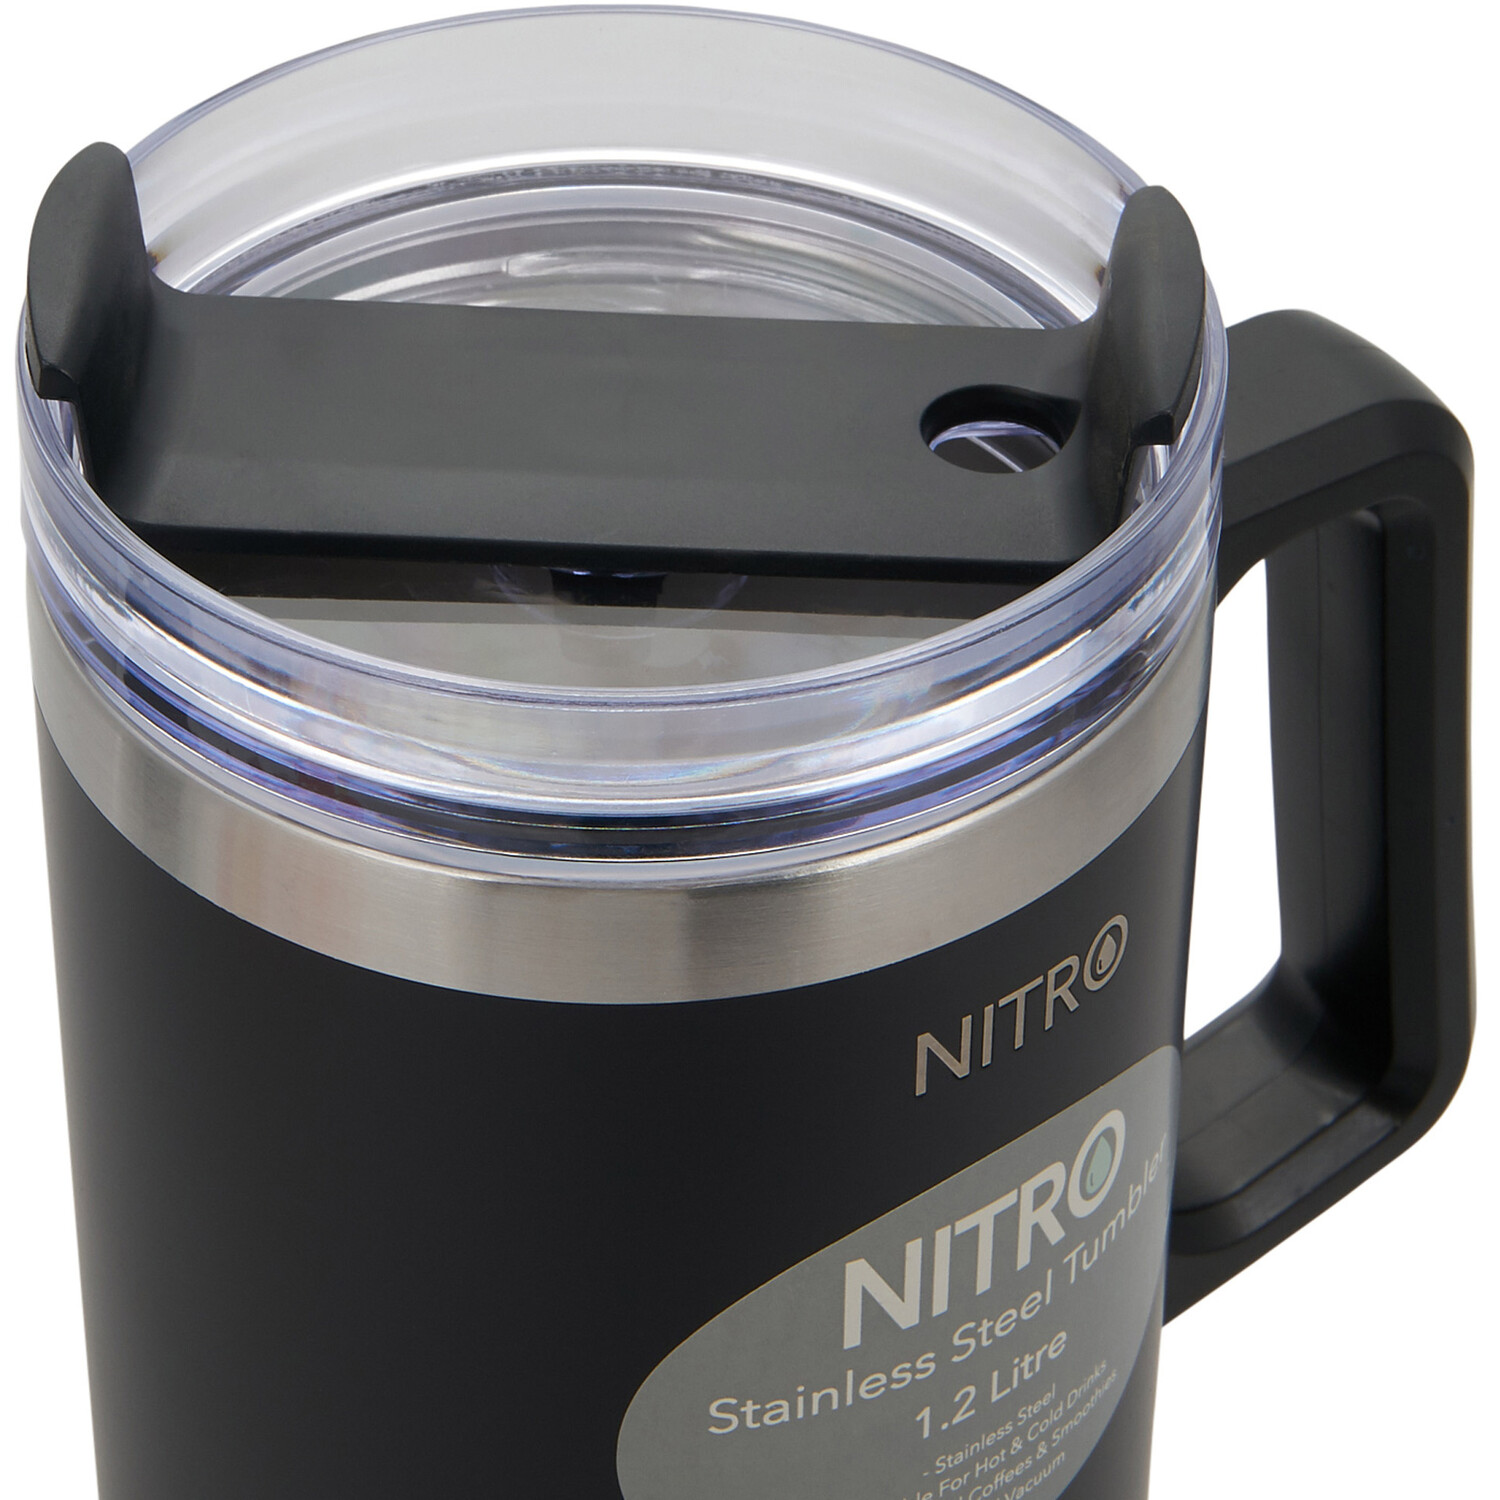 Nitro 1.2L Stainless Steel Tumbler - Black Image 4